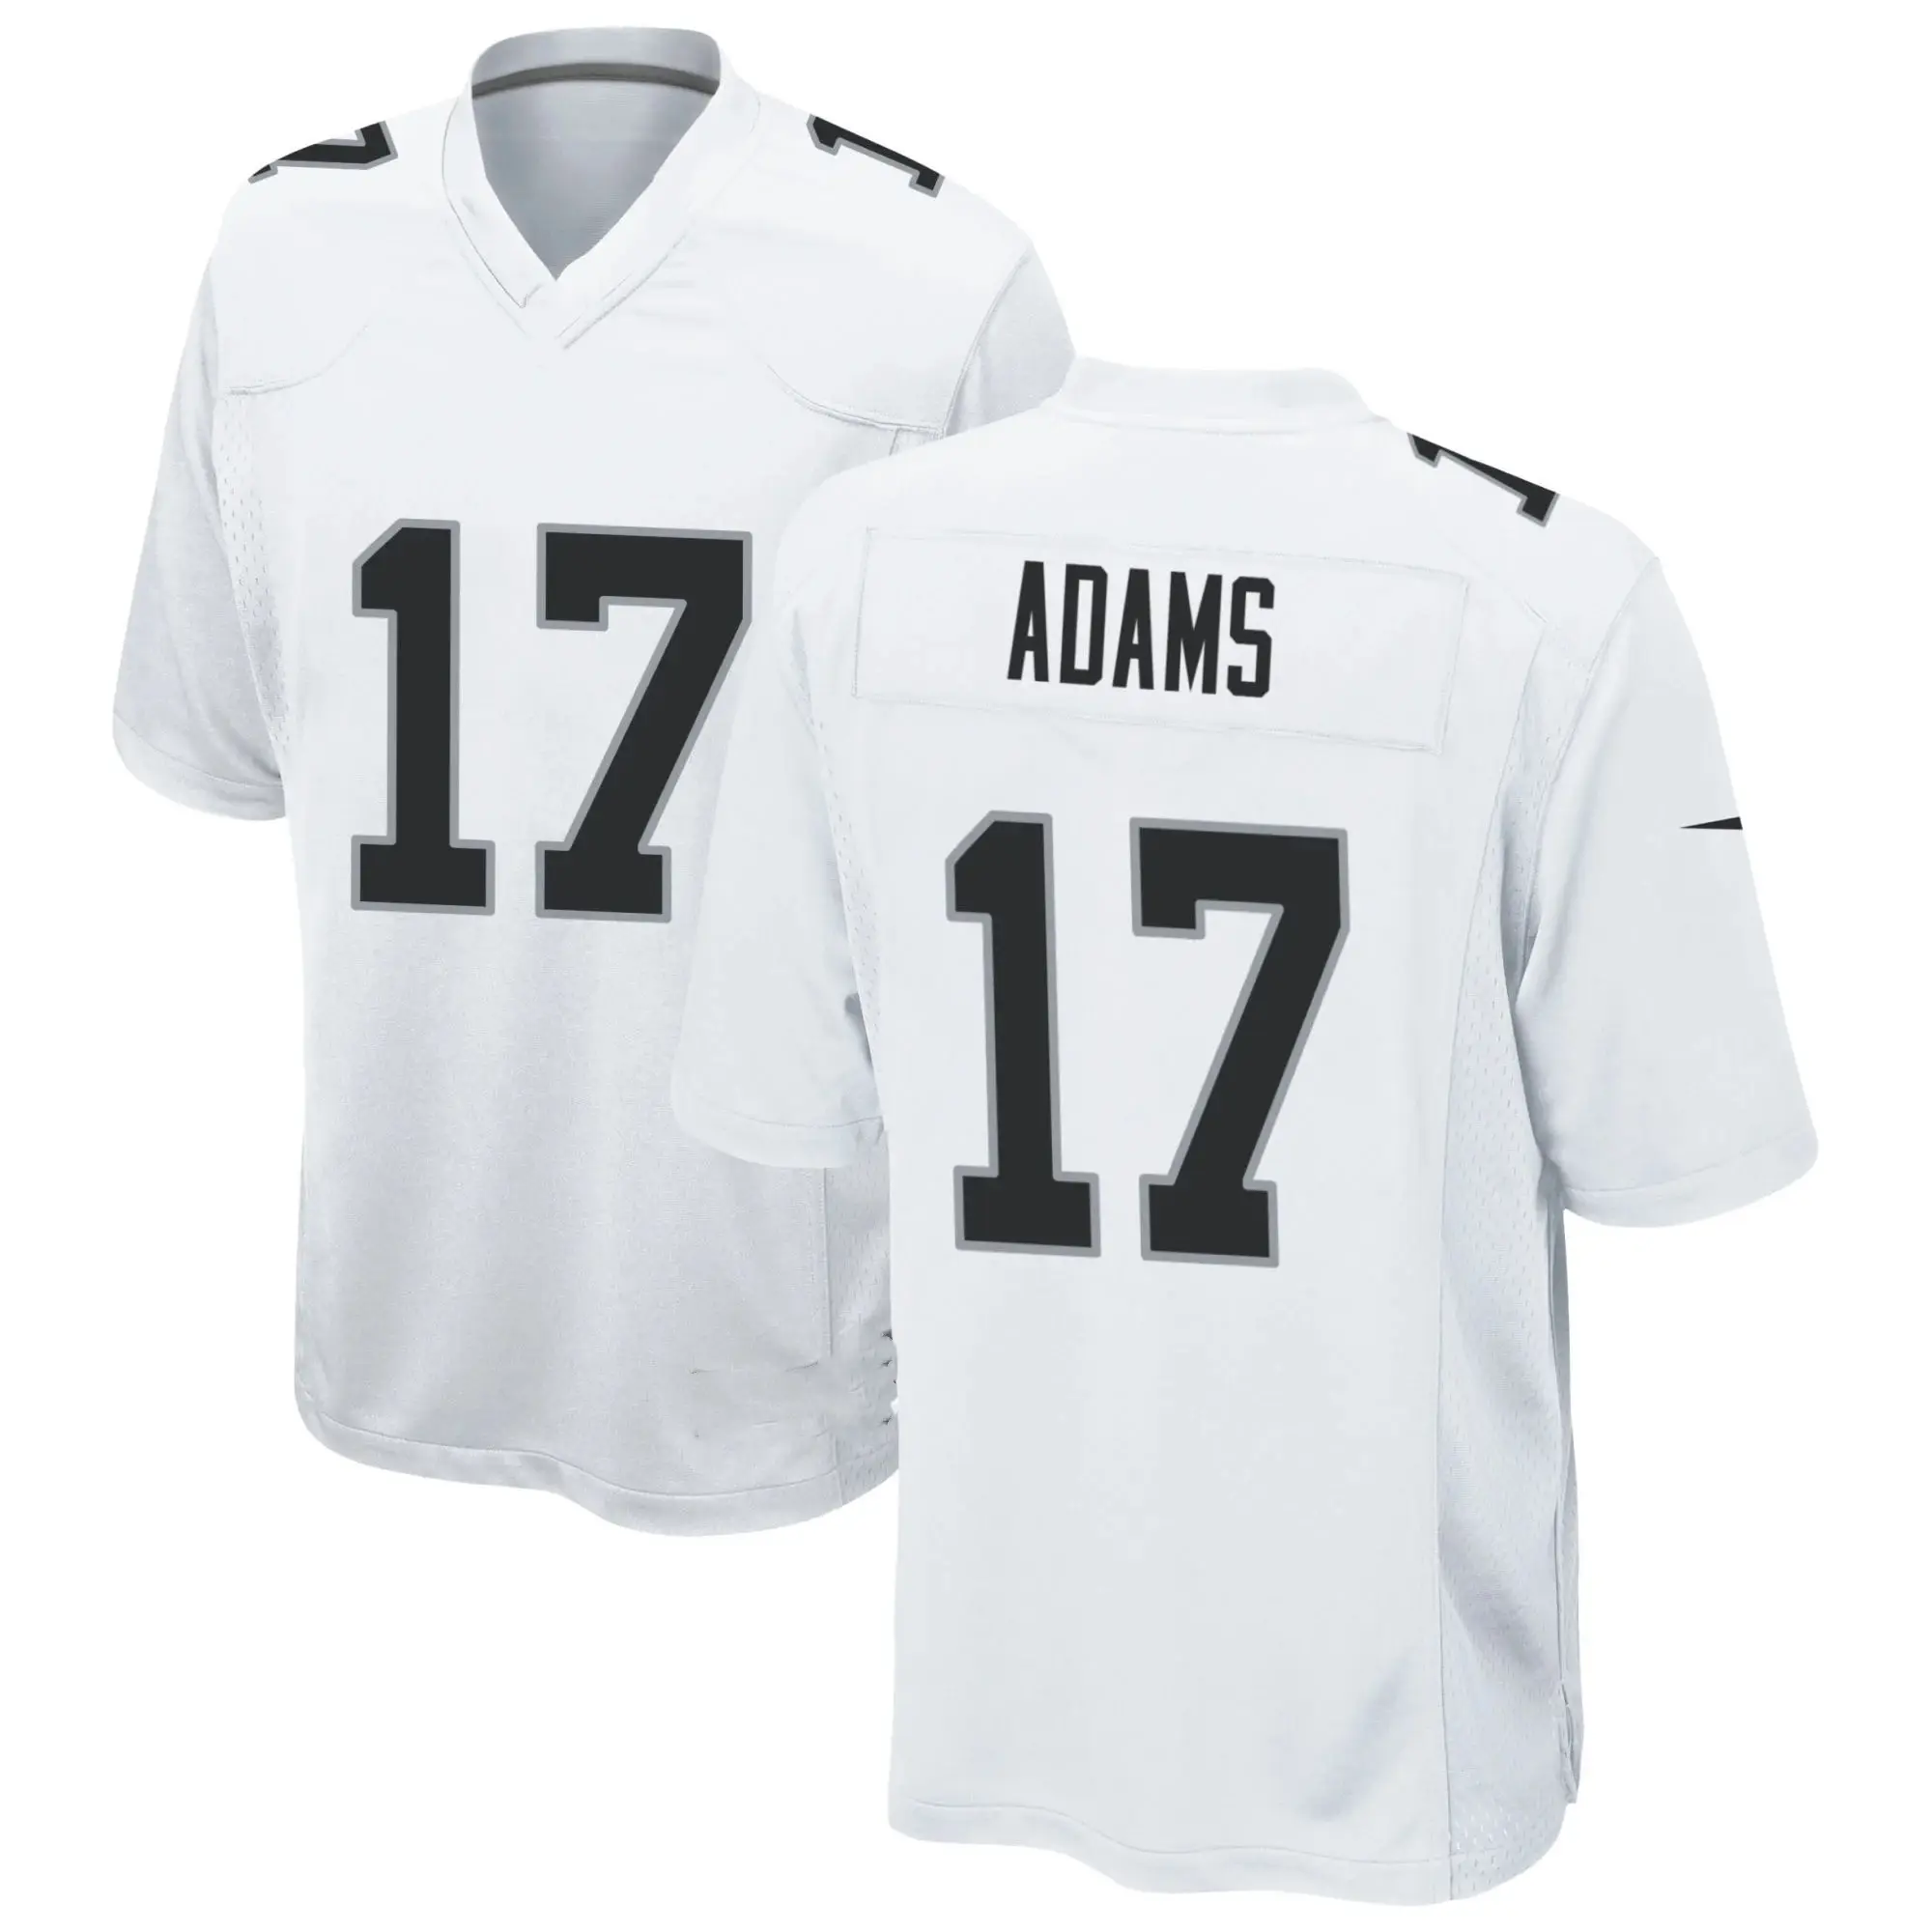 Alta qualidade Novo Costurado Futebol Americano Jersey Las Vegas #17 Davante Adams Vapor Limited Jersey